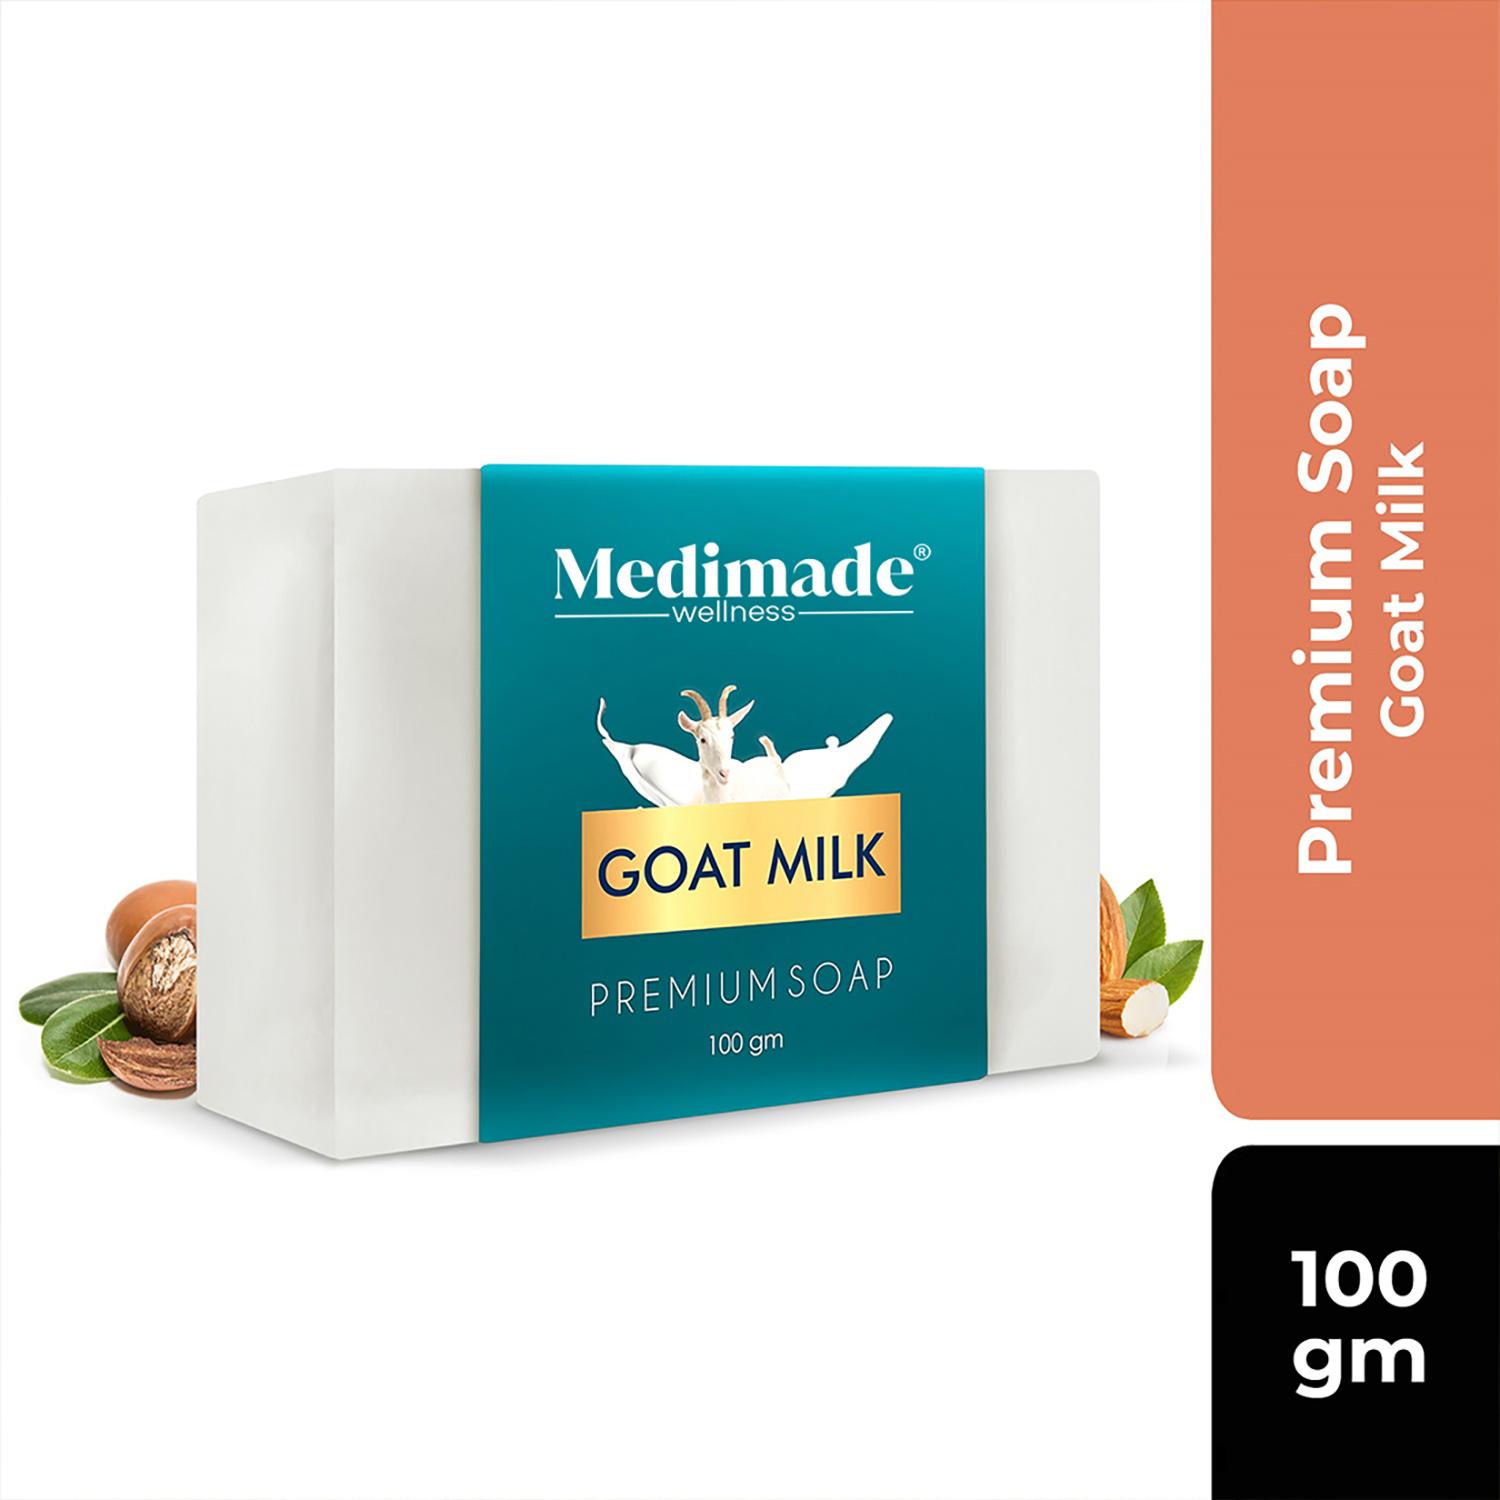 Medimade Goat Milk Premium Soap (100g)